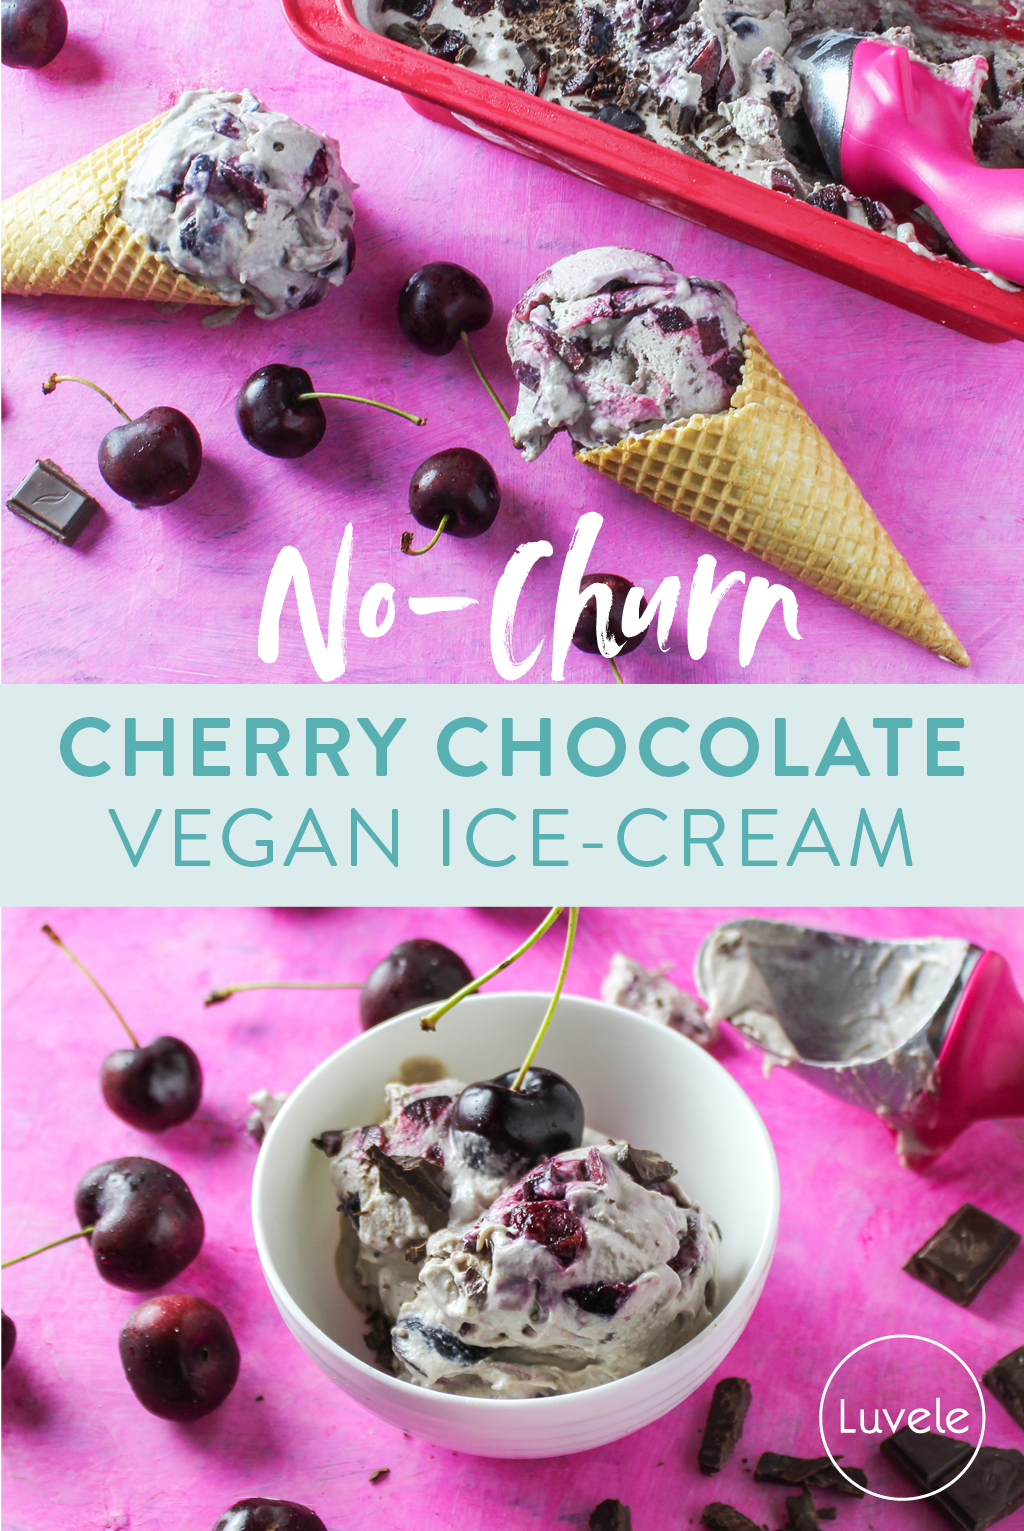 Cherry chocolate ice cream